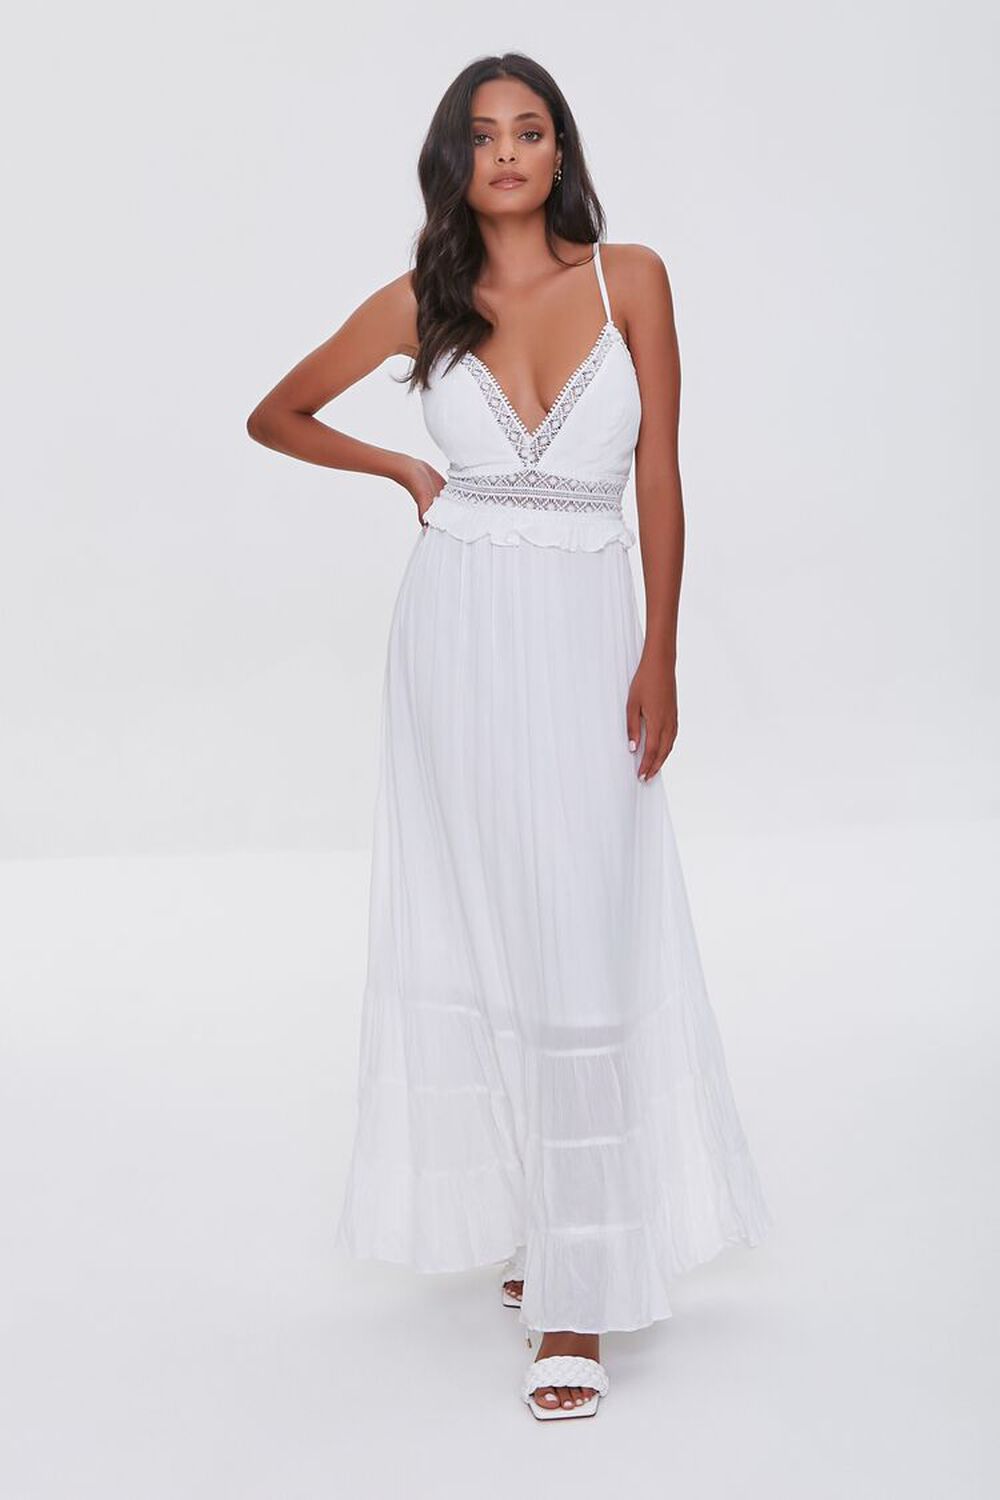 WHITE Crochet-Trim Lace-Up Maxi Dress, image 1